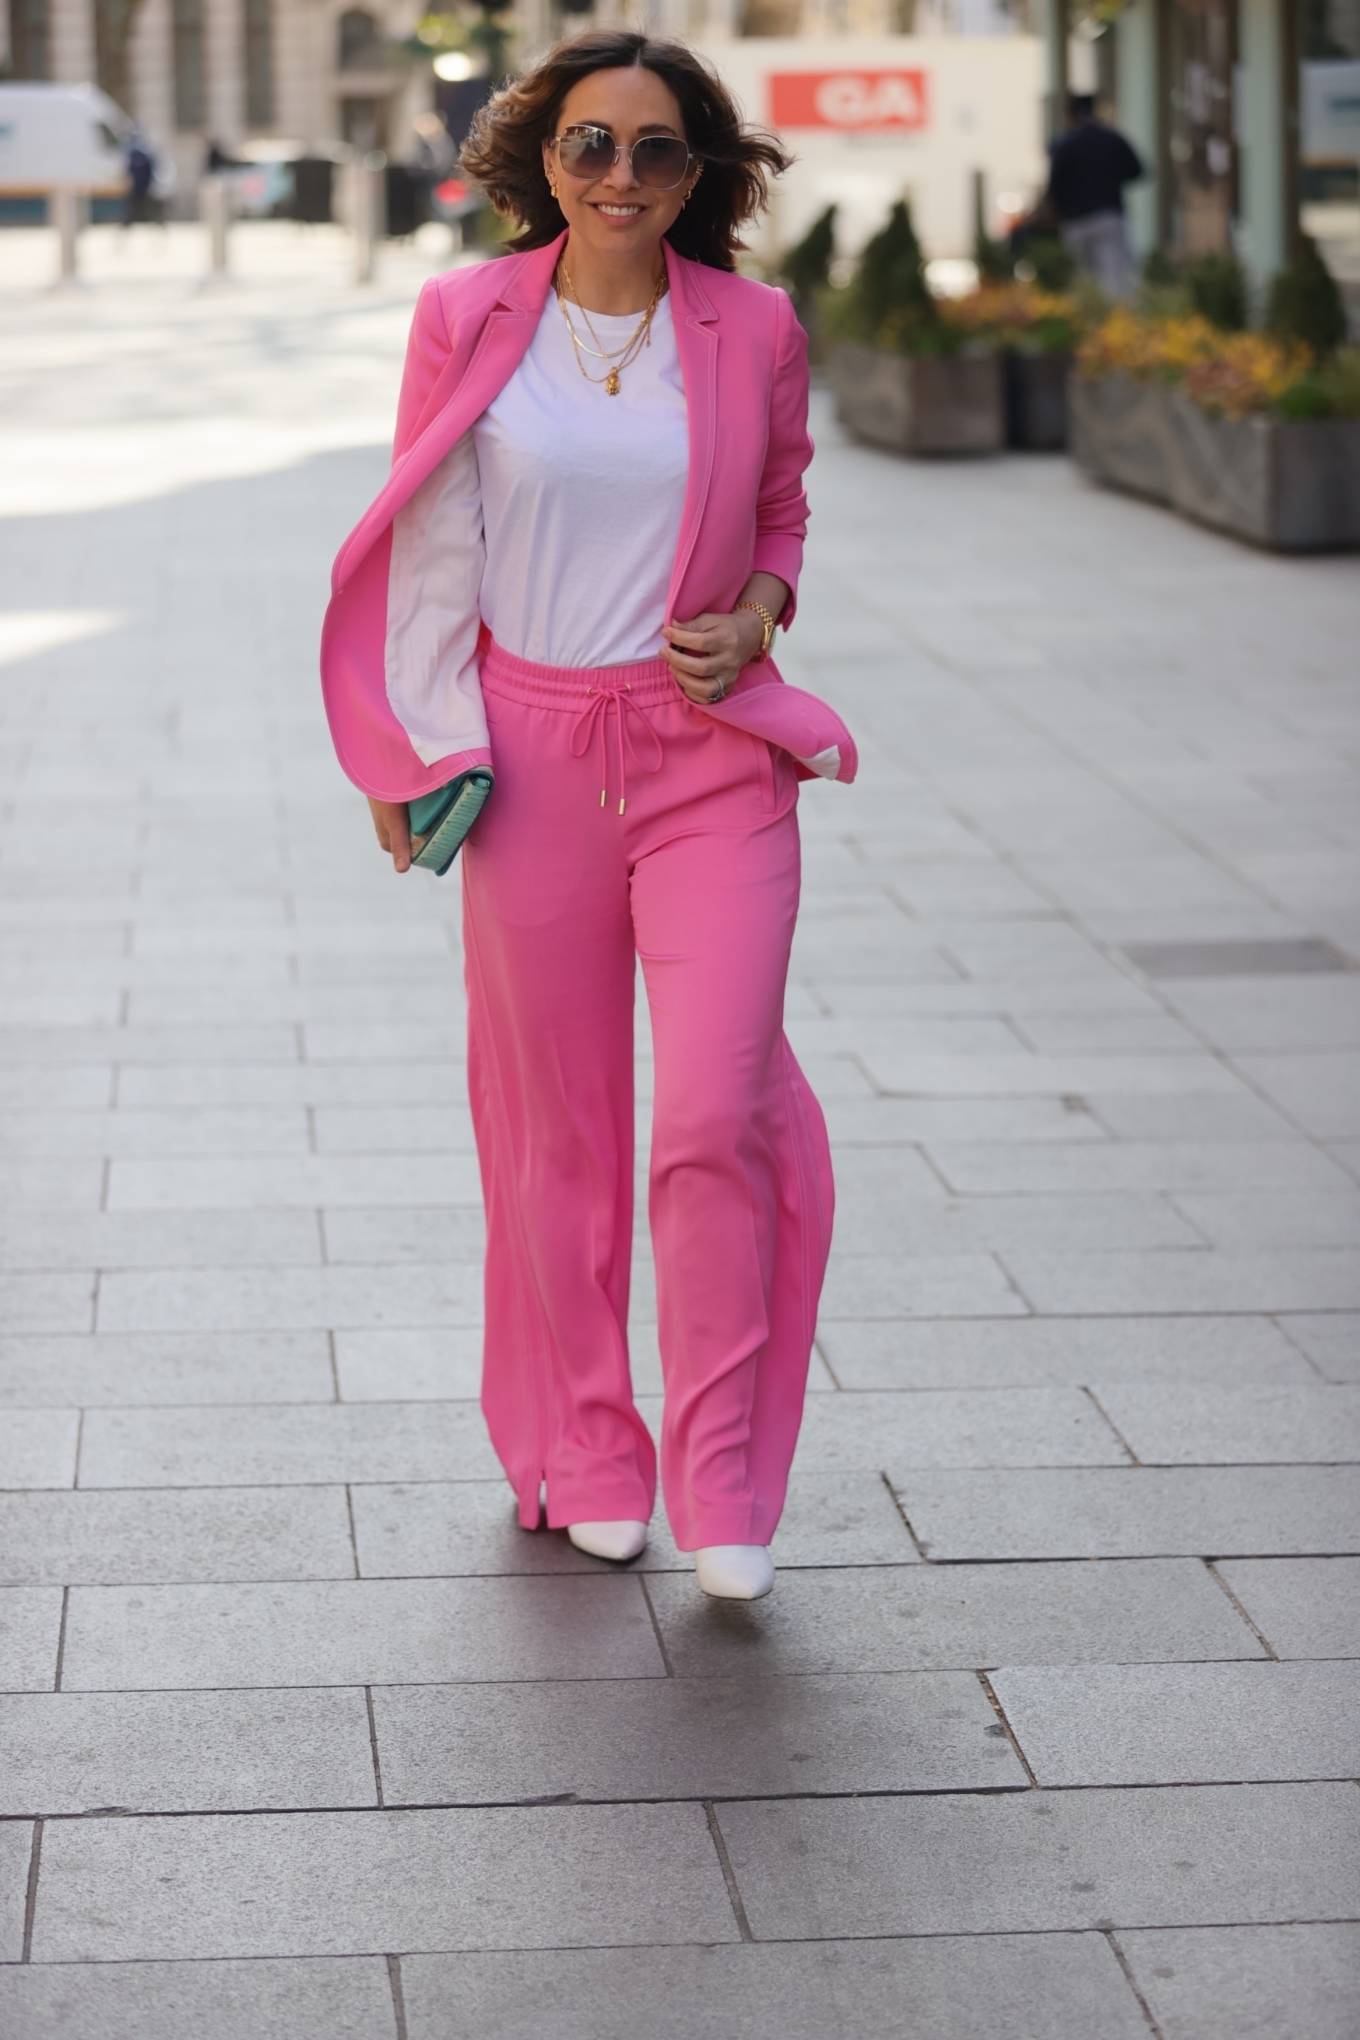 Myleene Klass 2021 : Myleene Klass – Out in pink on her Birthday at Smooth radio in London-10